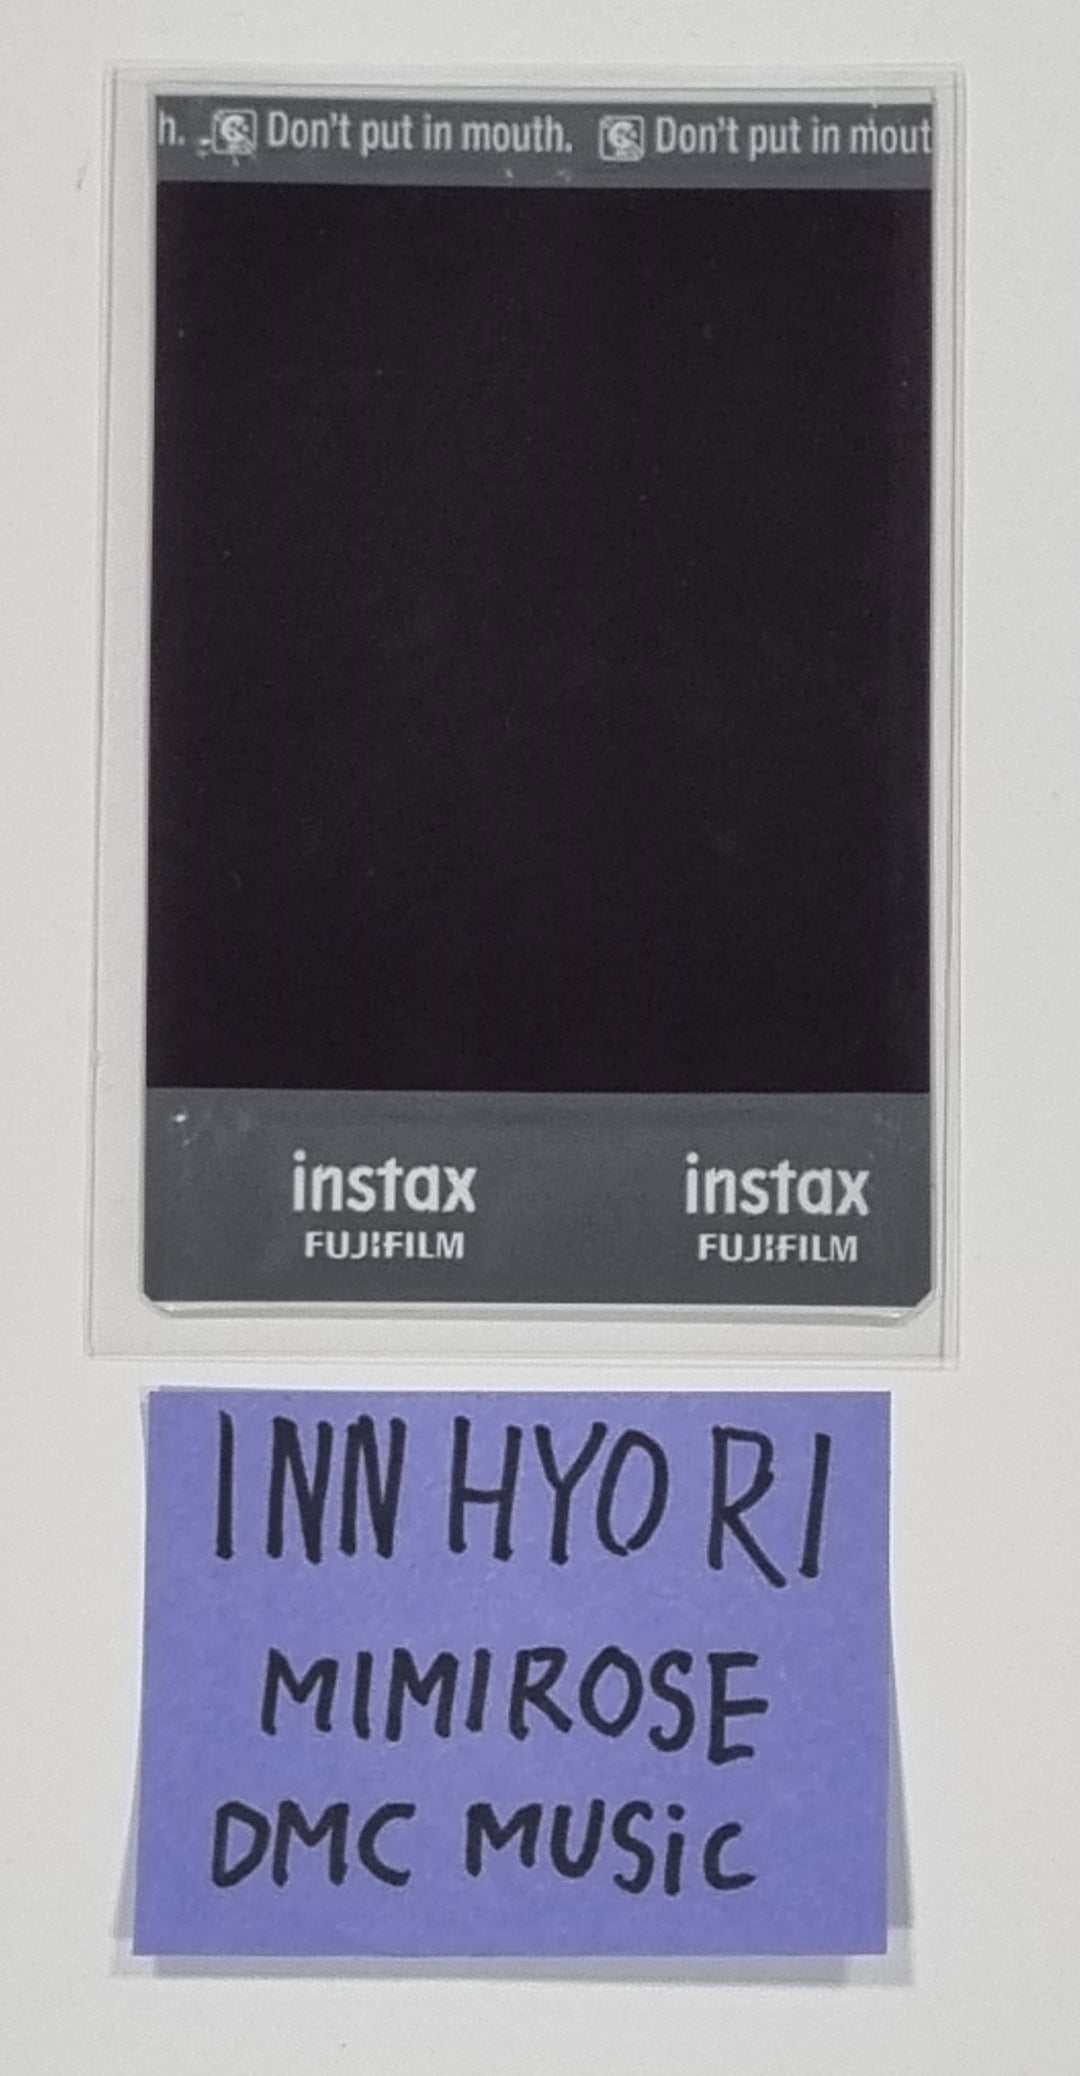 INN HYORI (Of Mimiirose) "LIVE" - Hand Autographed(Signed) Polaroid [23.10.13]